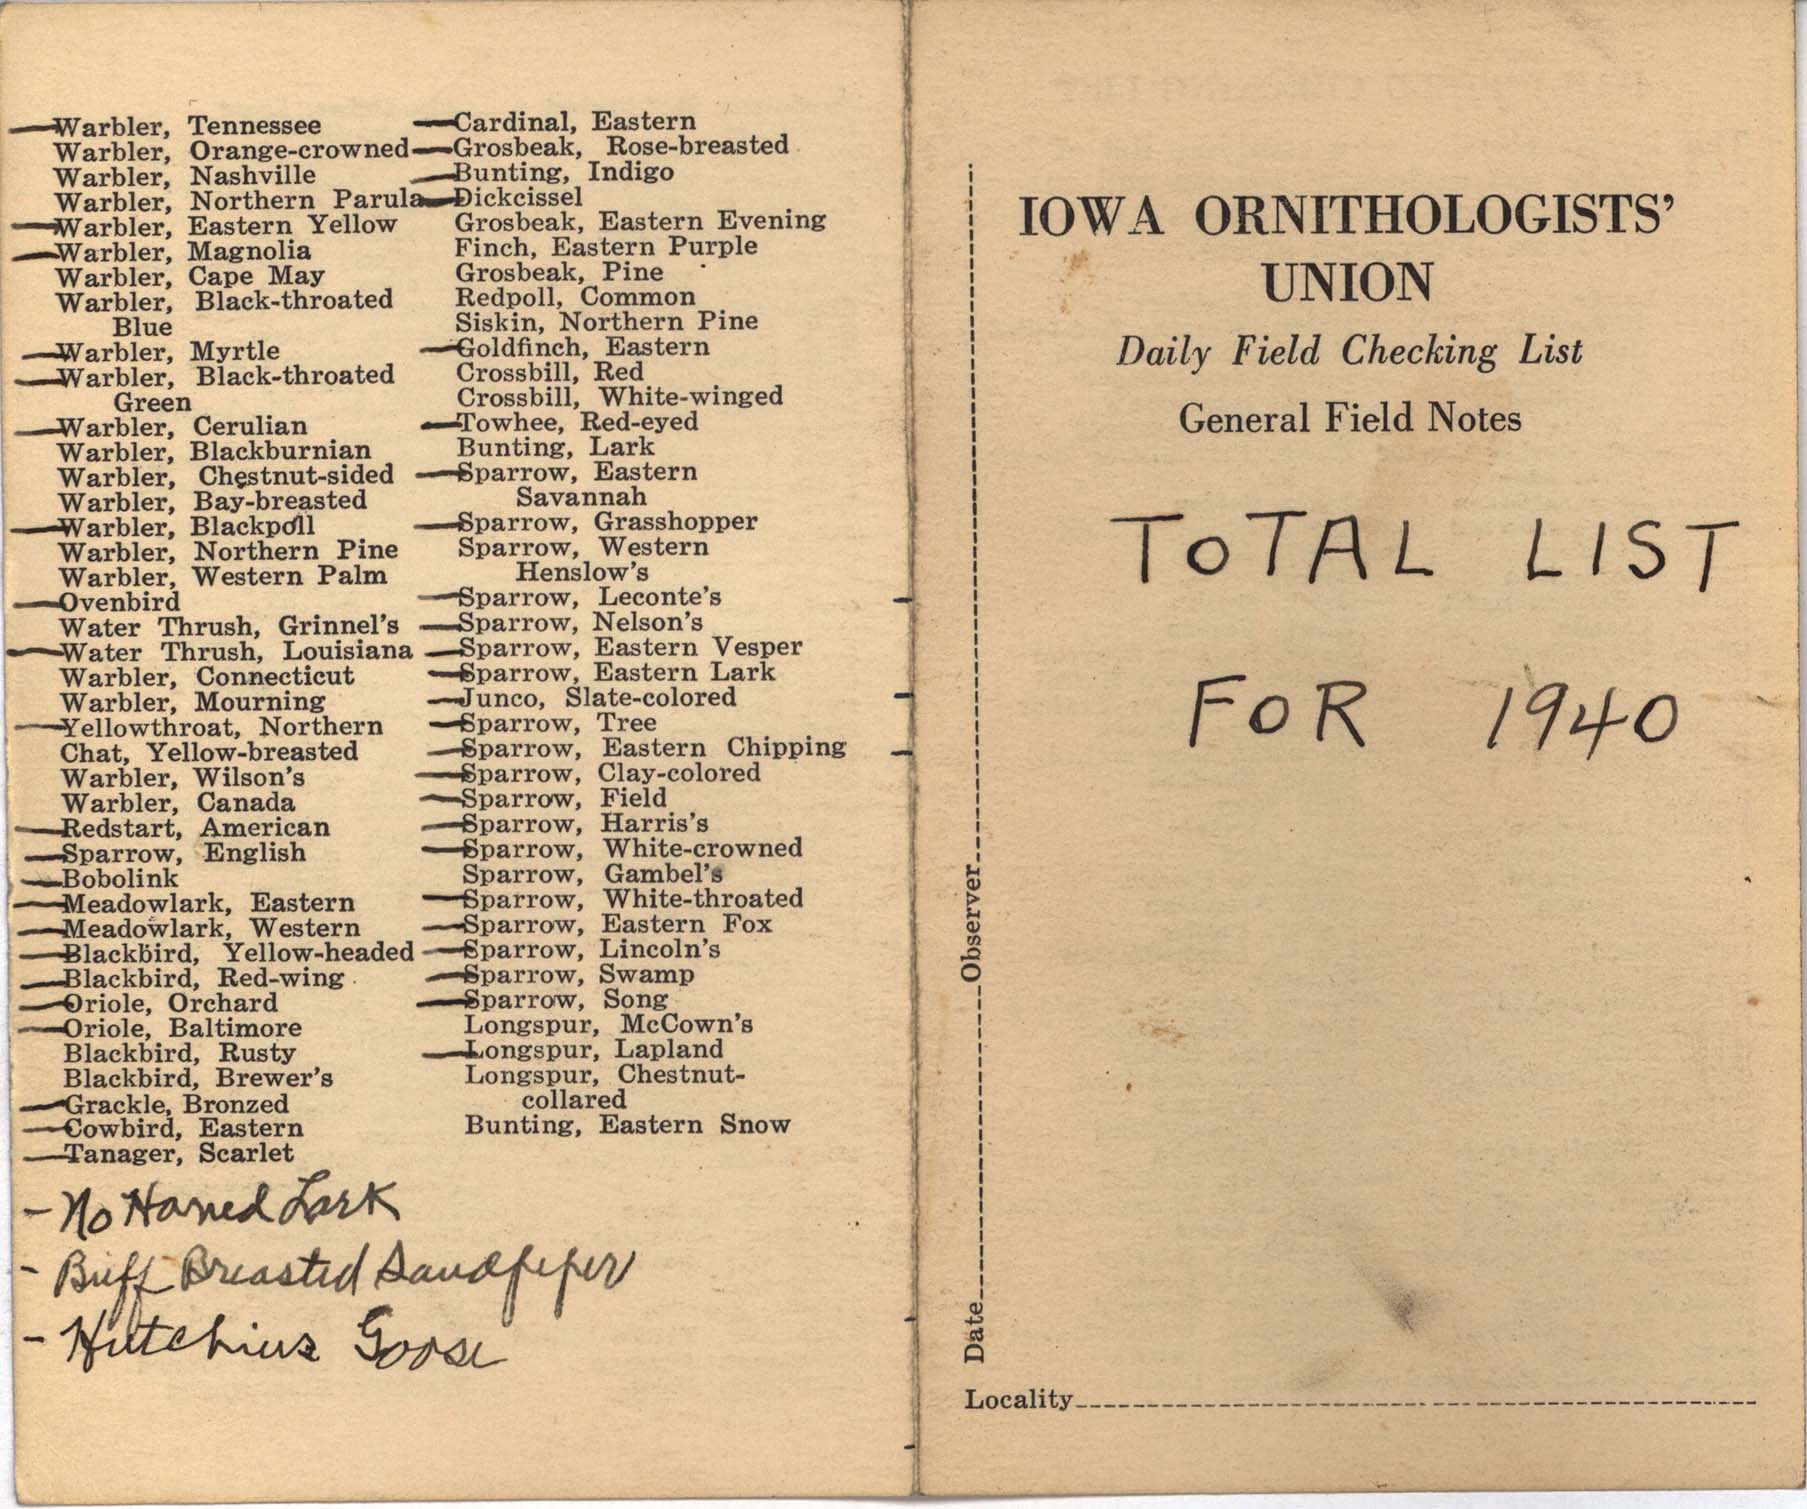 Daily field checking list by Walter Rosene, 1940